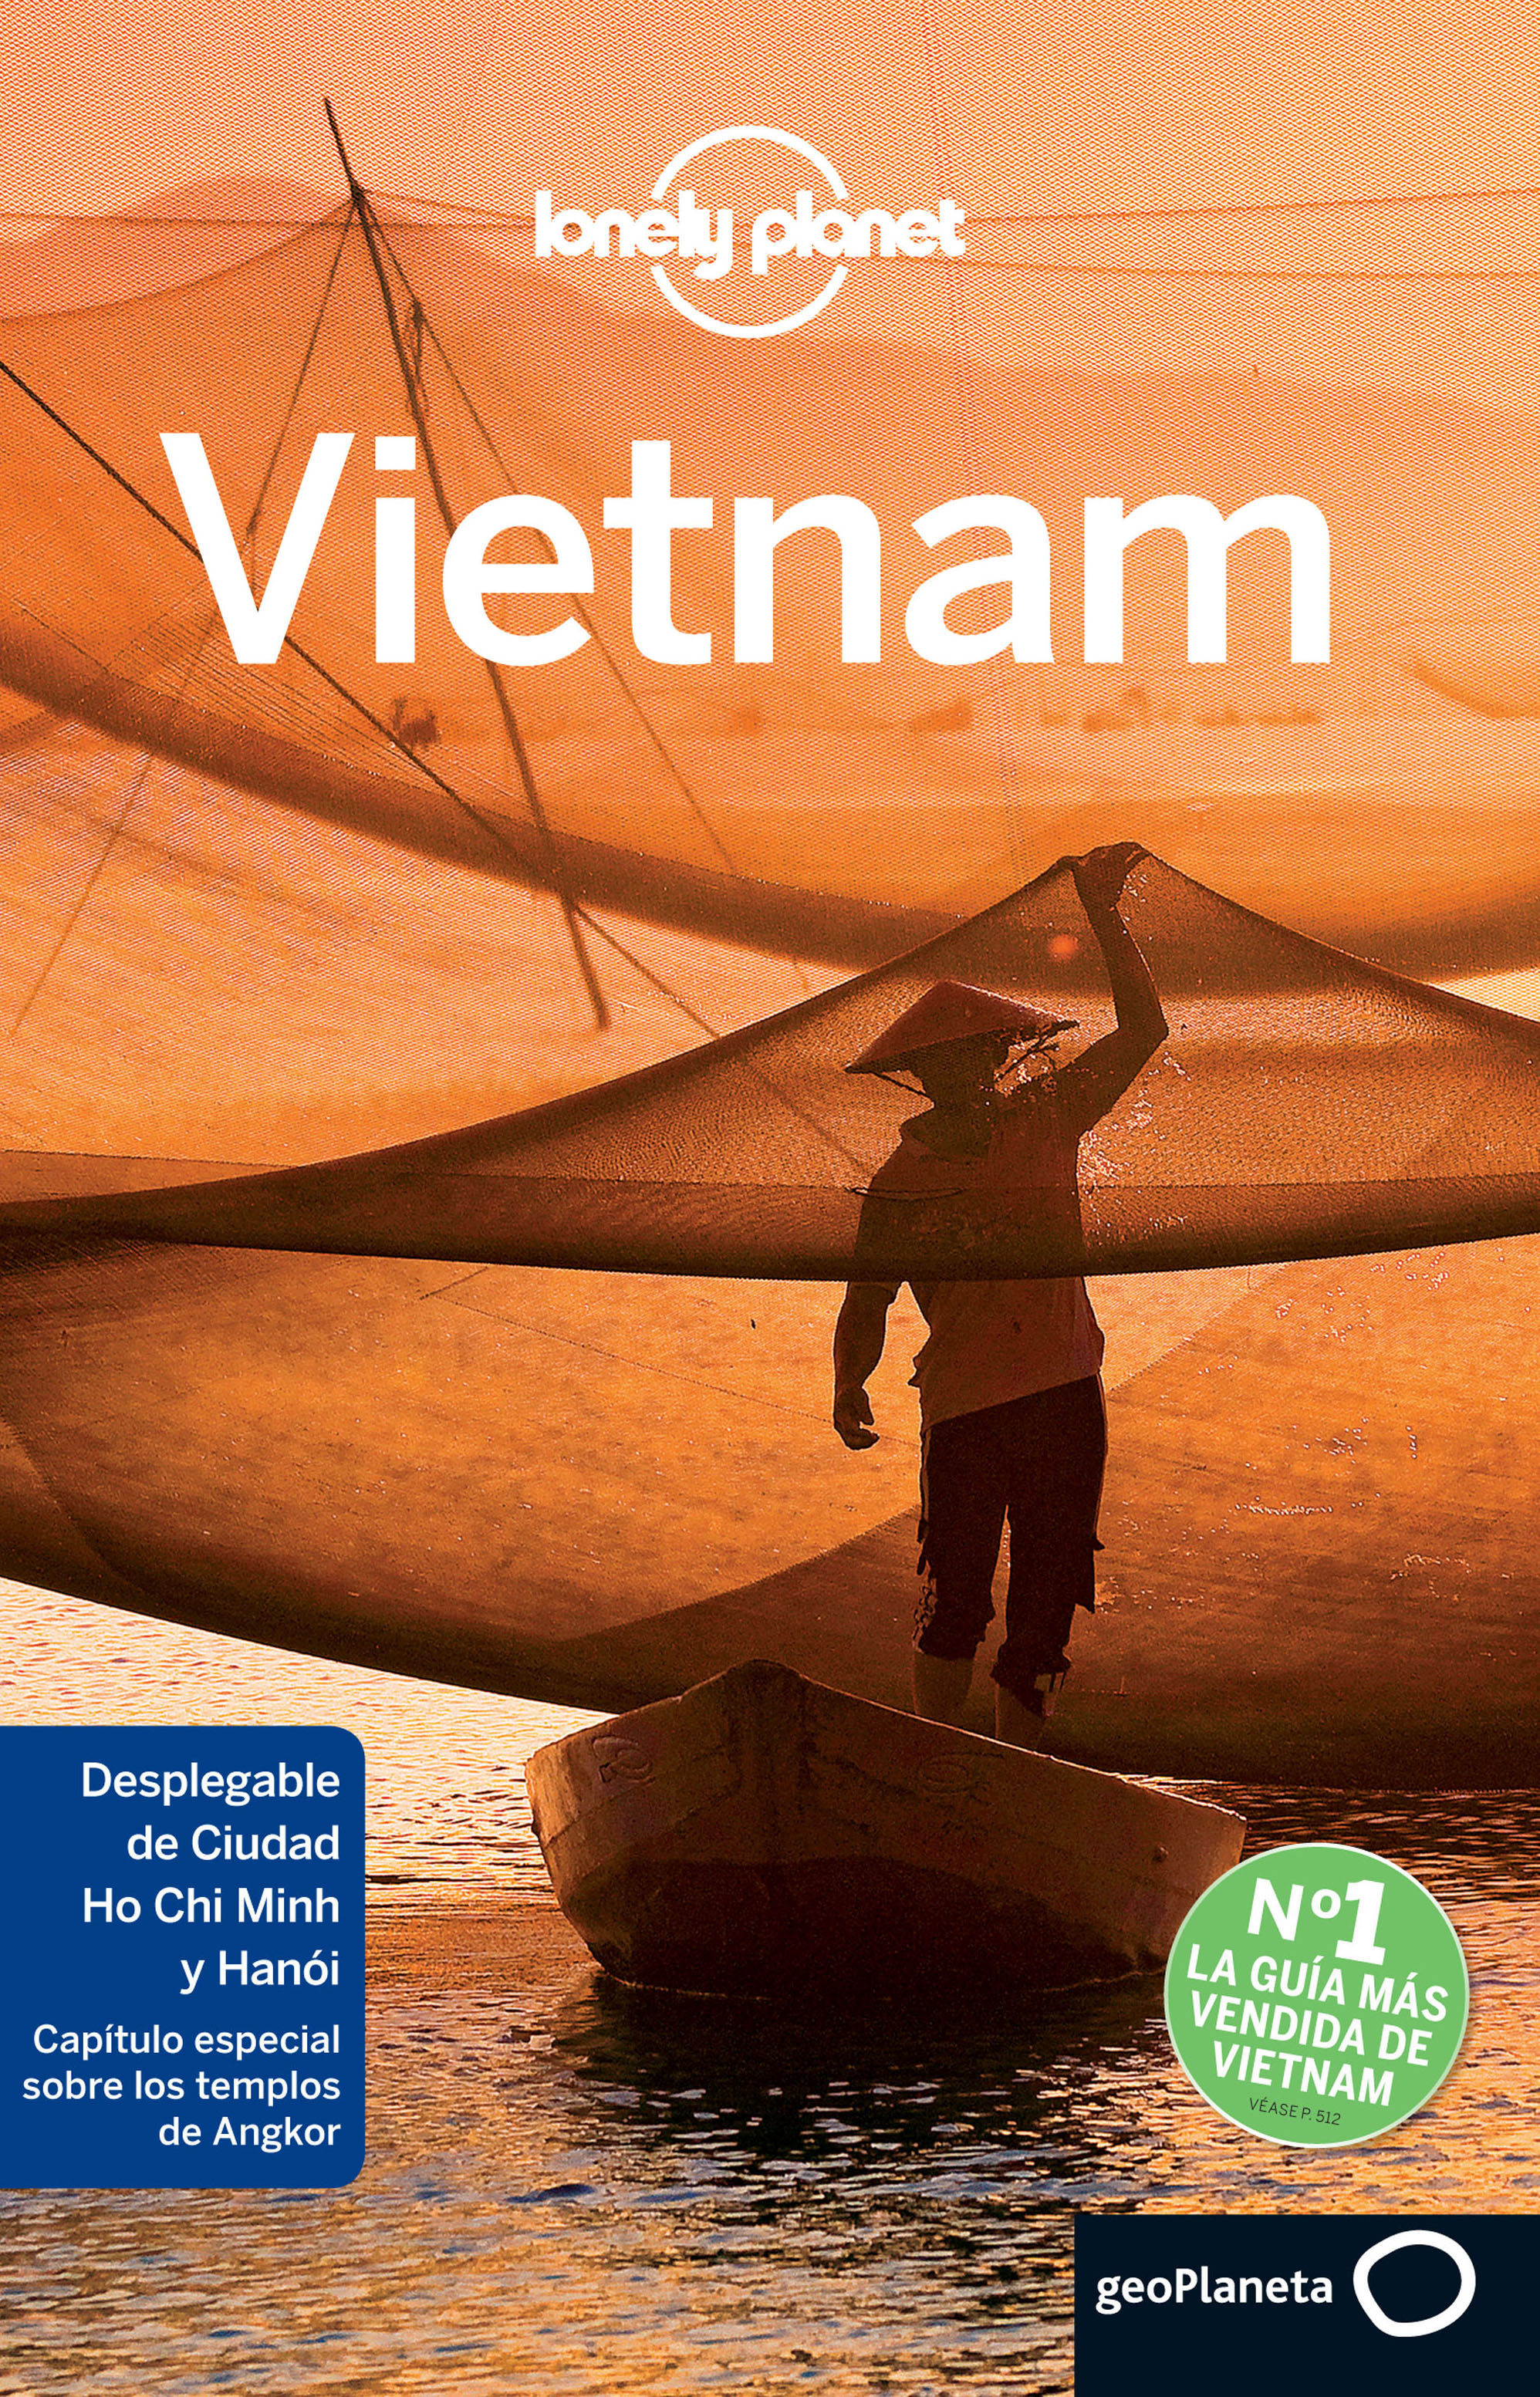 Gua viajera Lonely Planet de Vietnam.